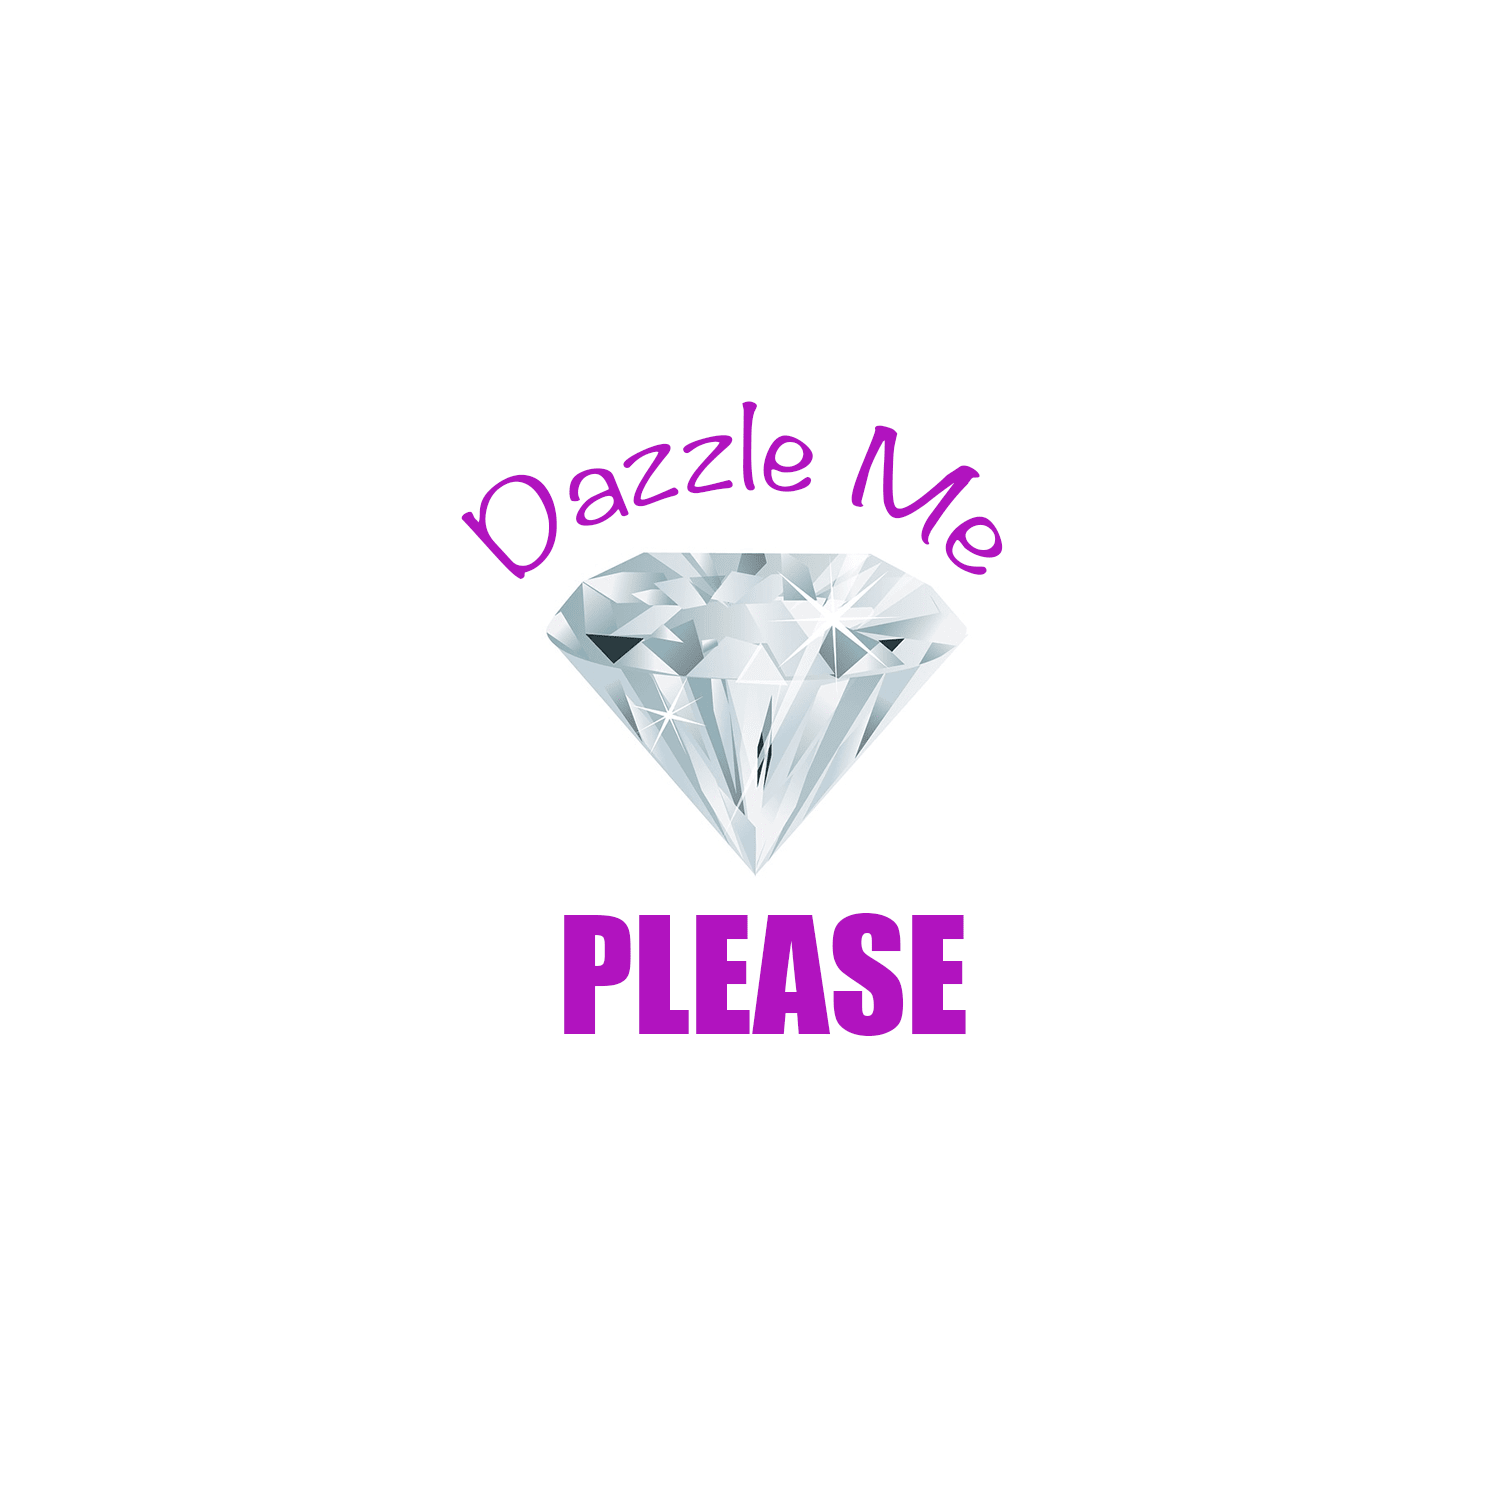 Dazzle Me Please